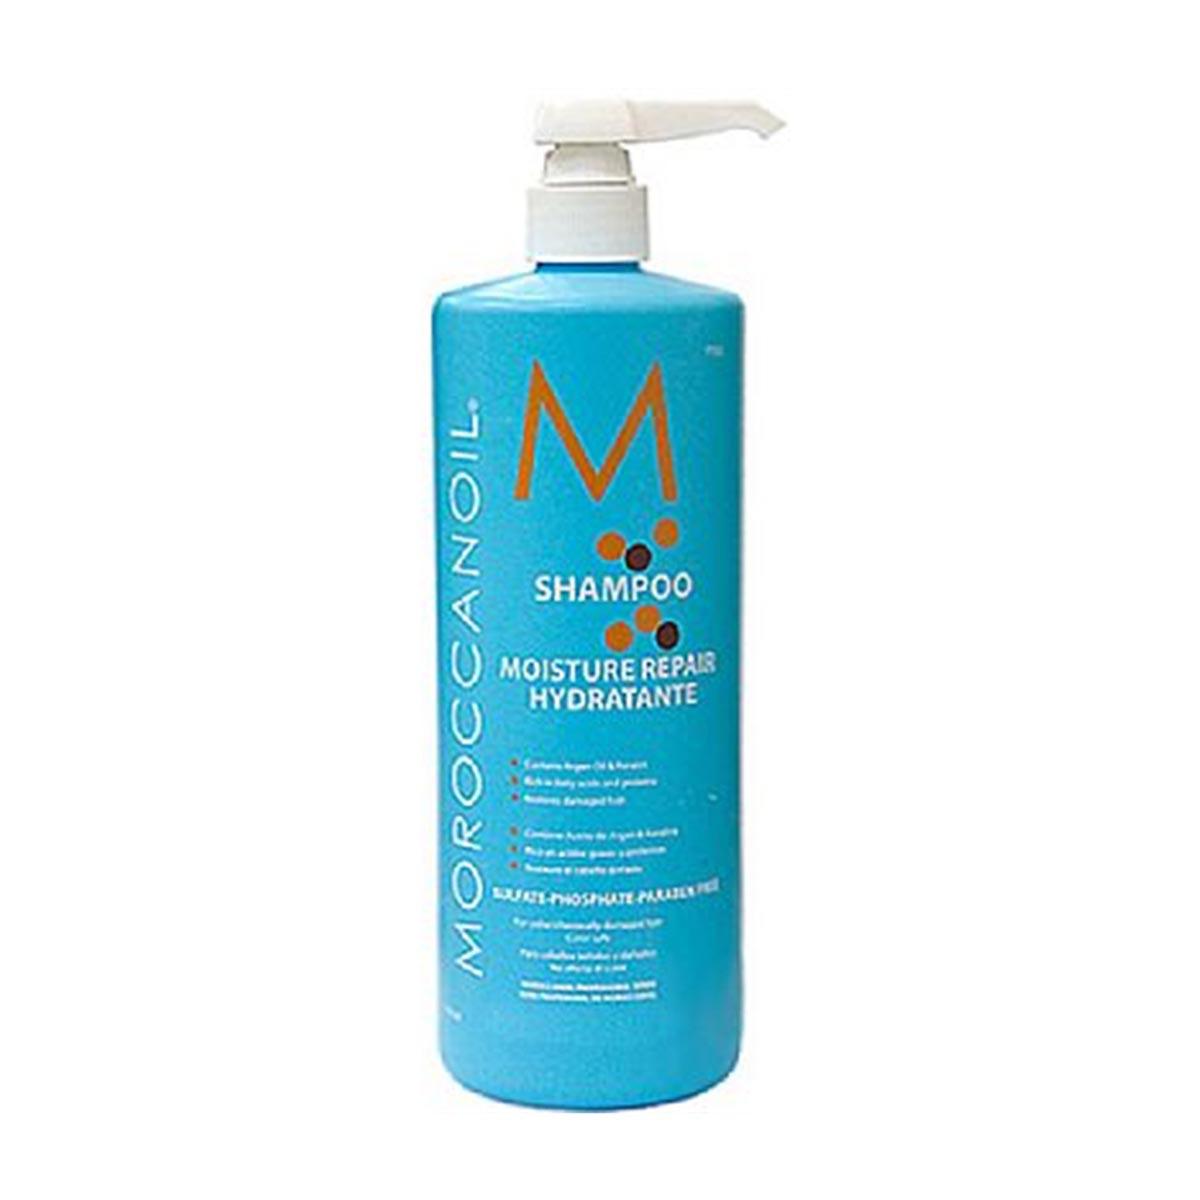 moroccanoil-shampooing-moisture-repair-hydratante-1000ml